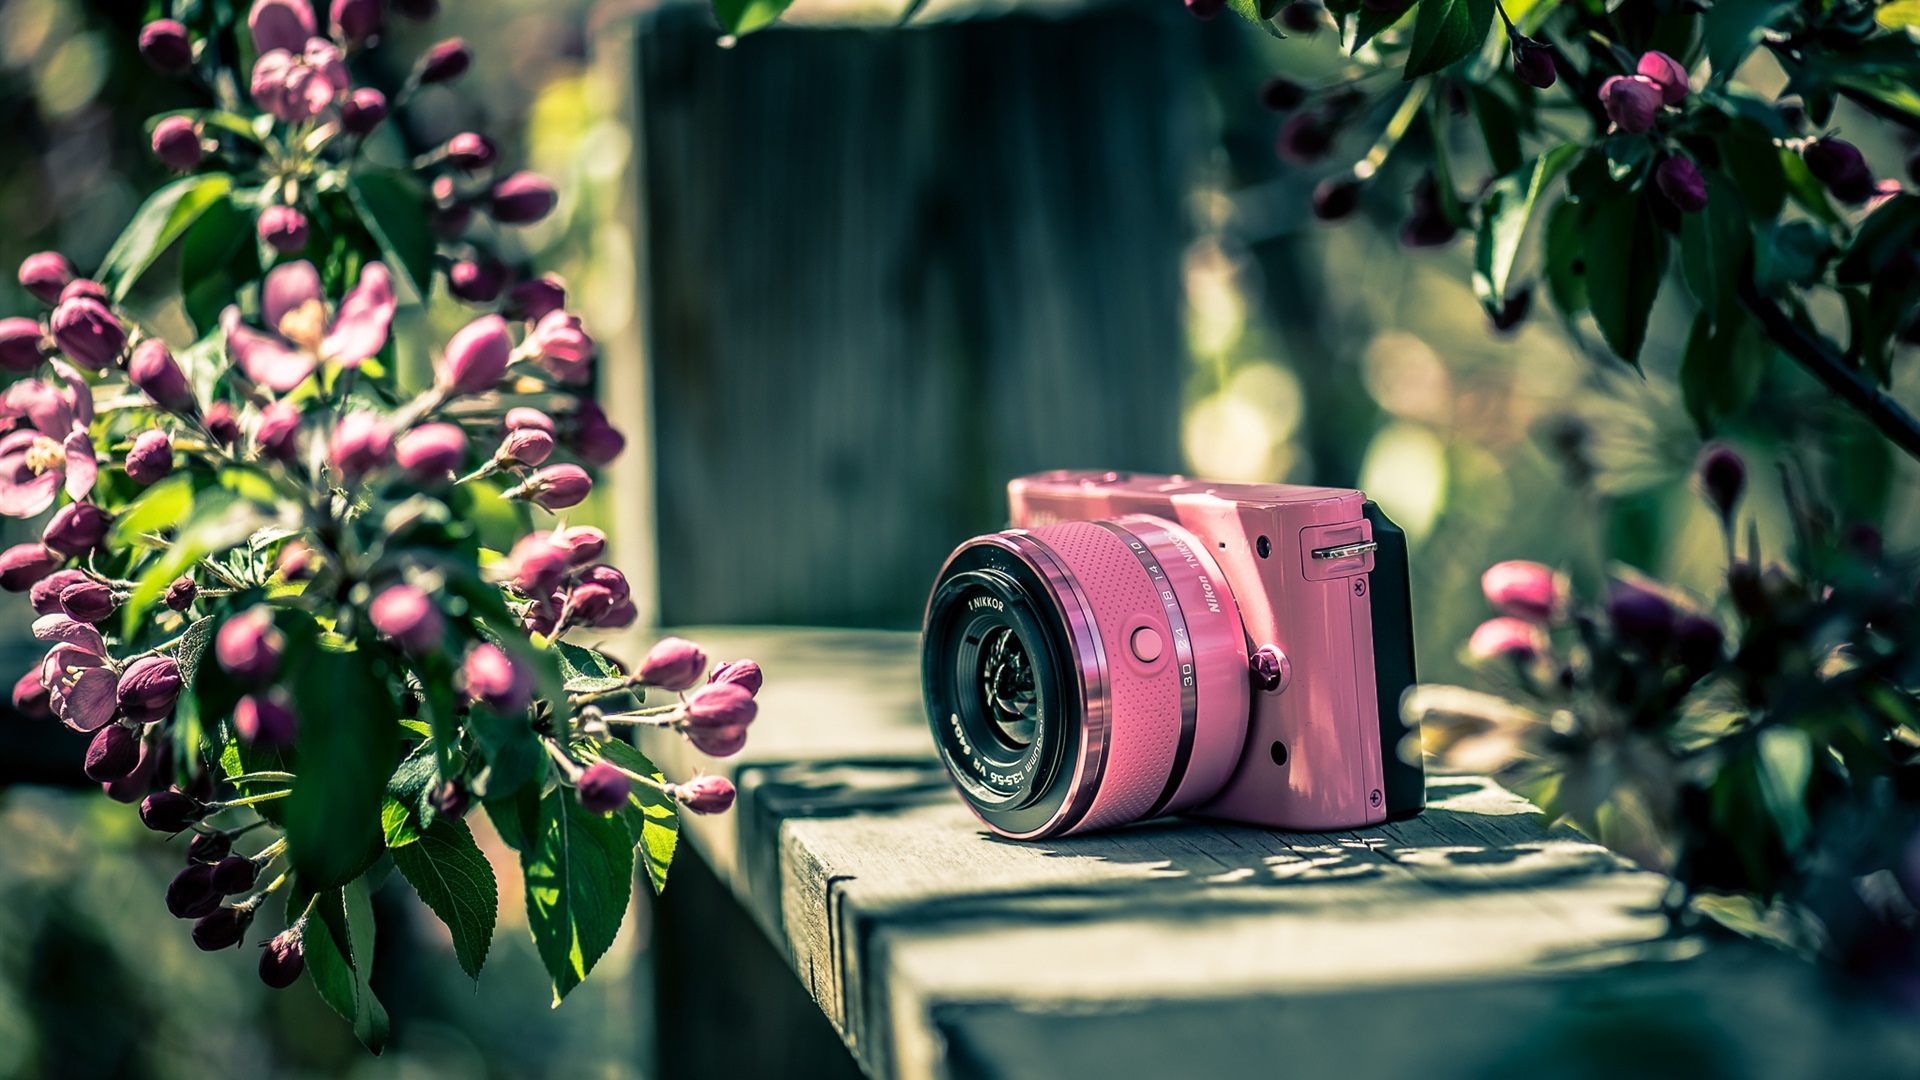 General 1920x1080 Nikon camera flowers plants nature photography garden technology pink